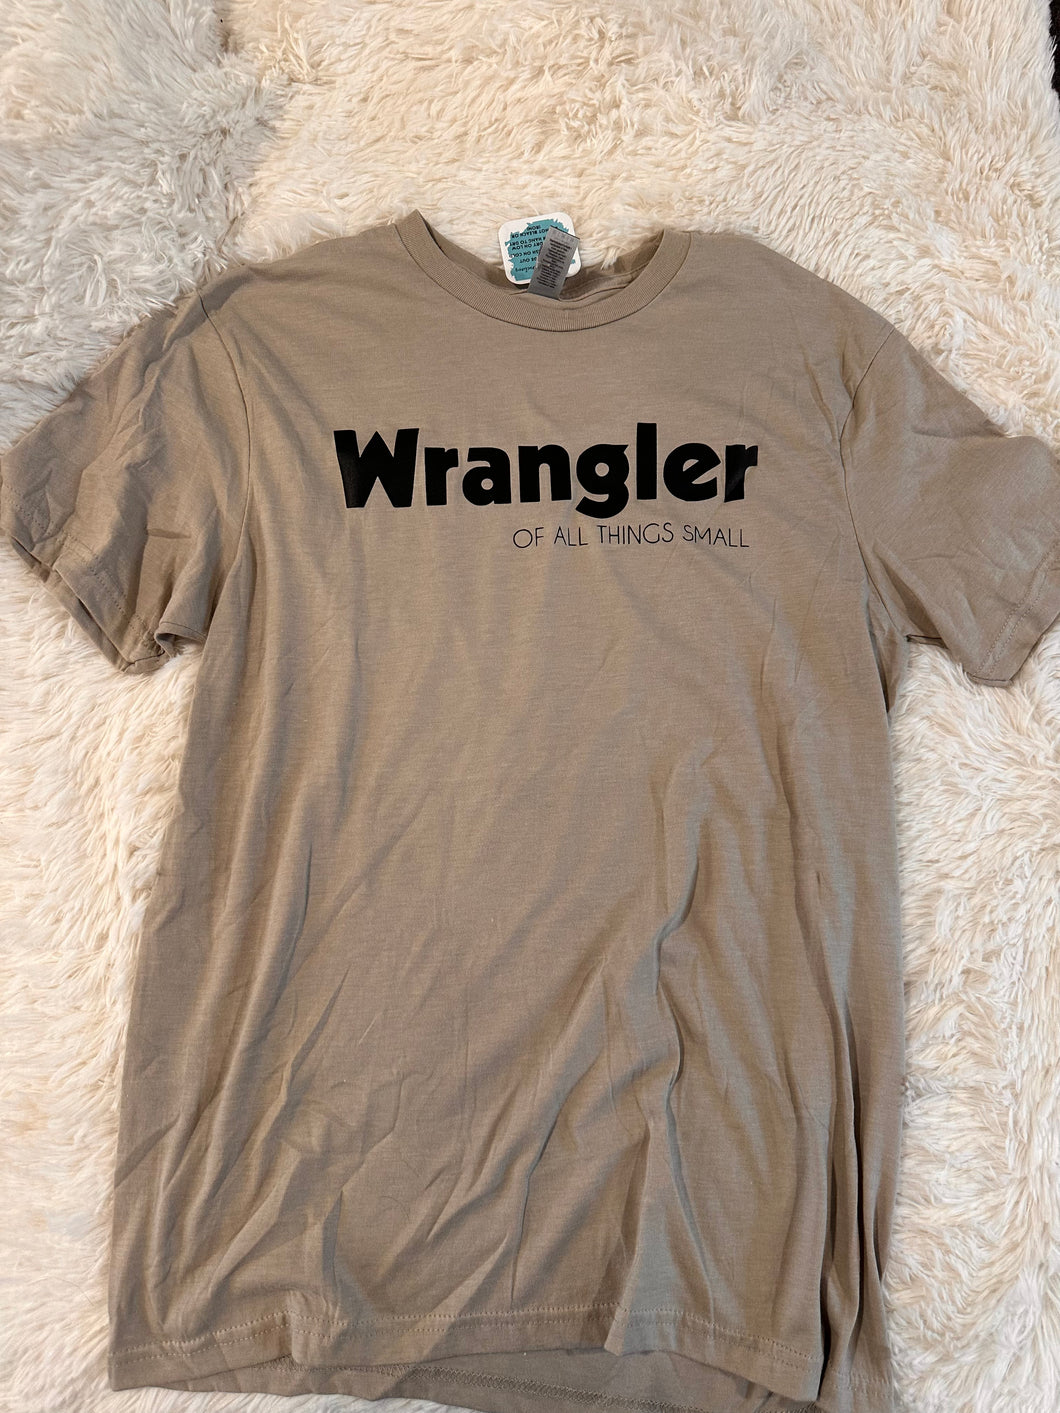 Wrangler of all things small T-shirt - Medium